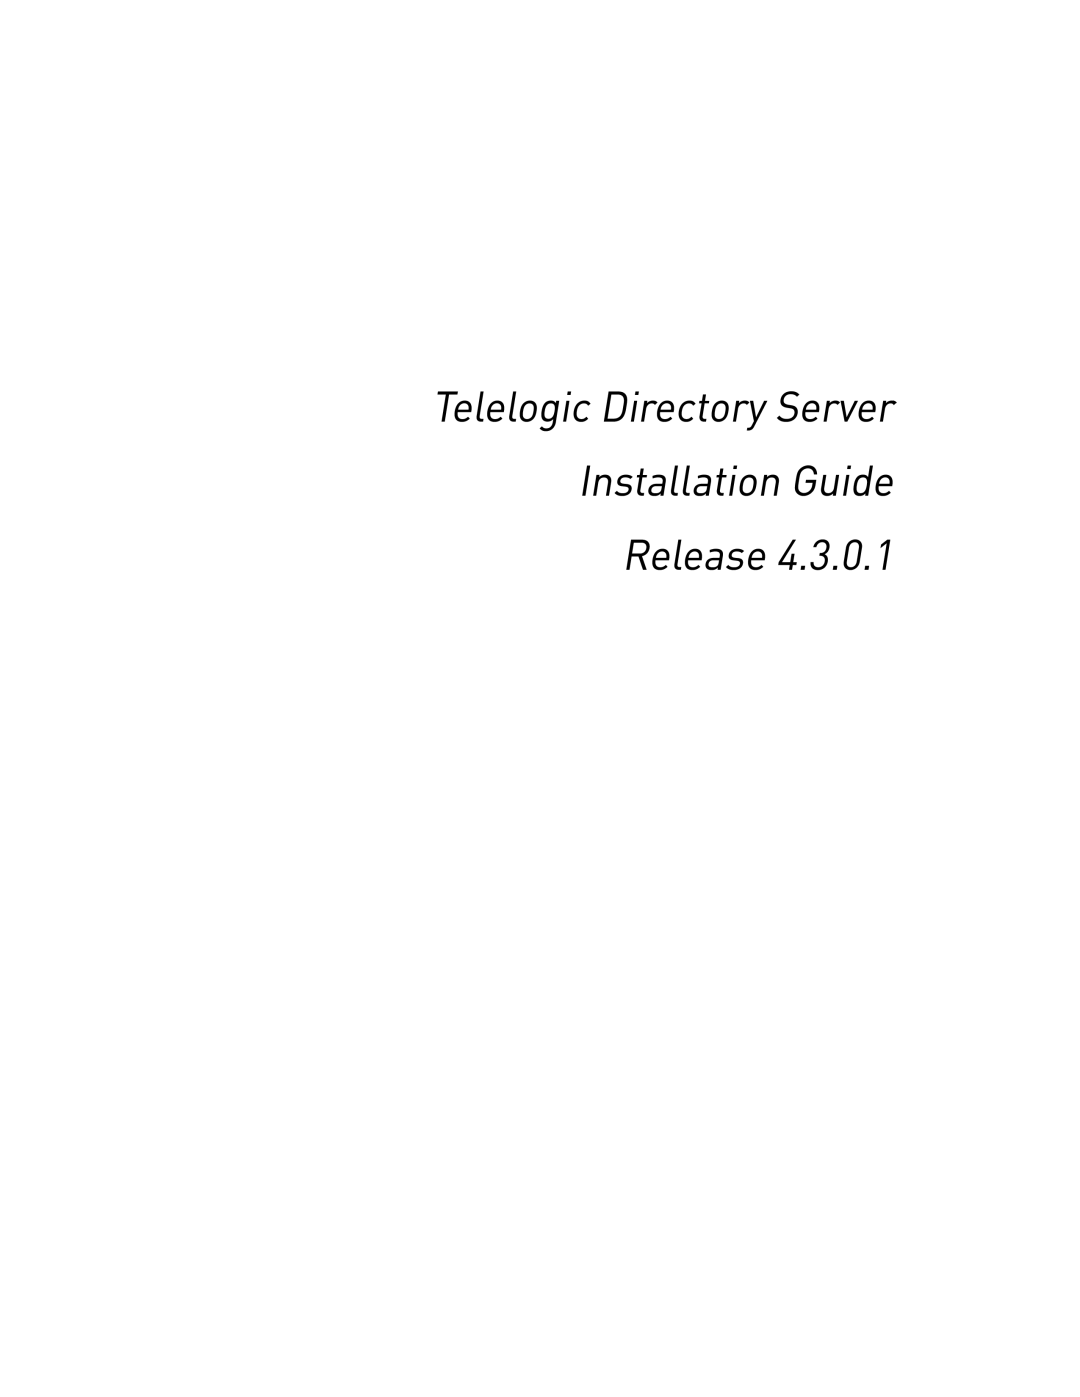 IBM Telelogic Directory Server manual Installation Guide Release 